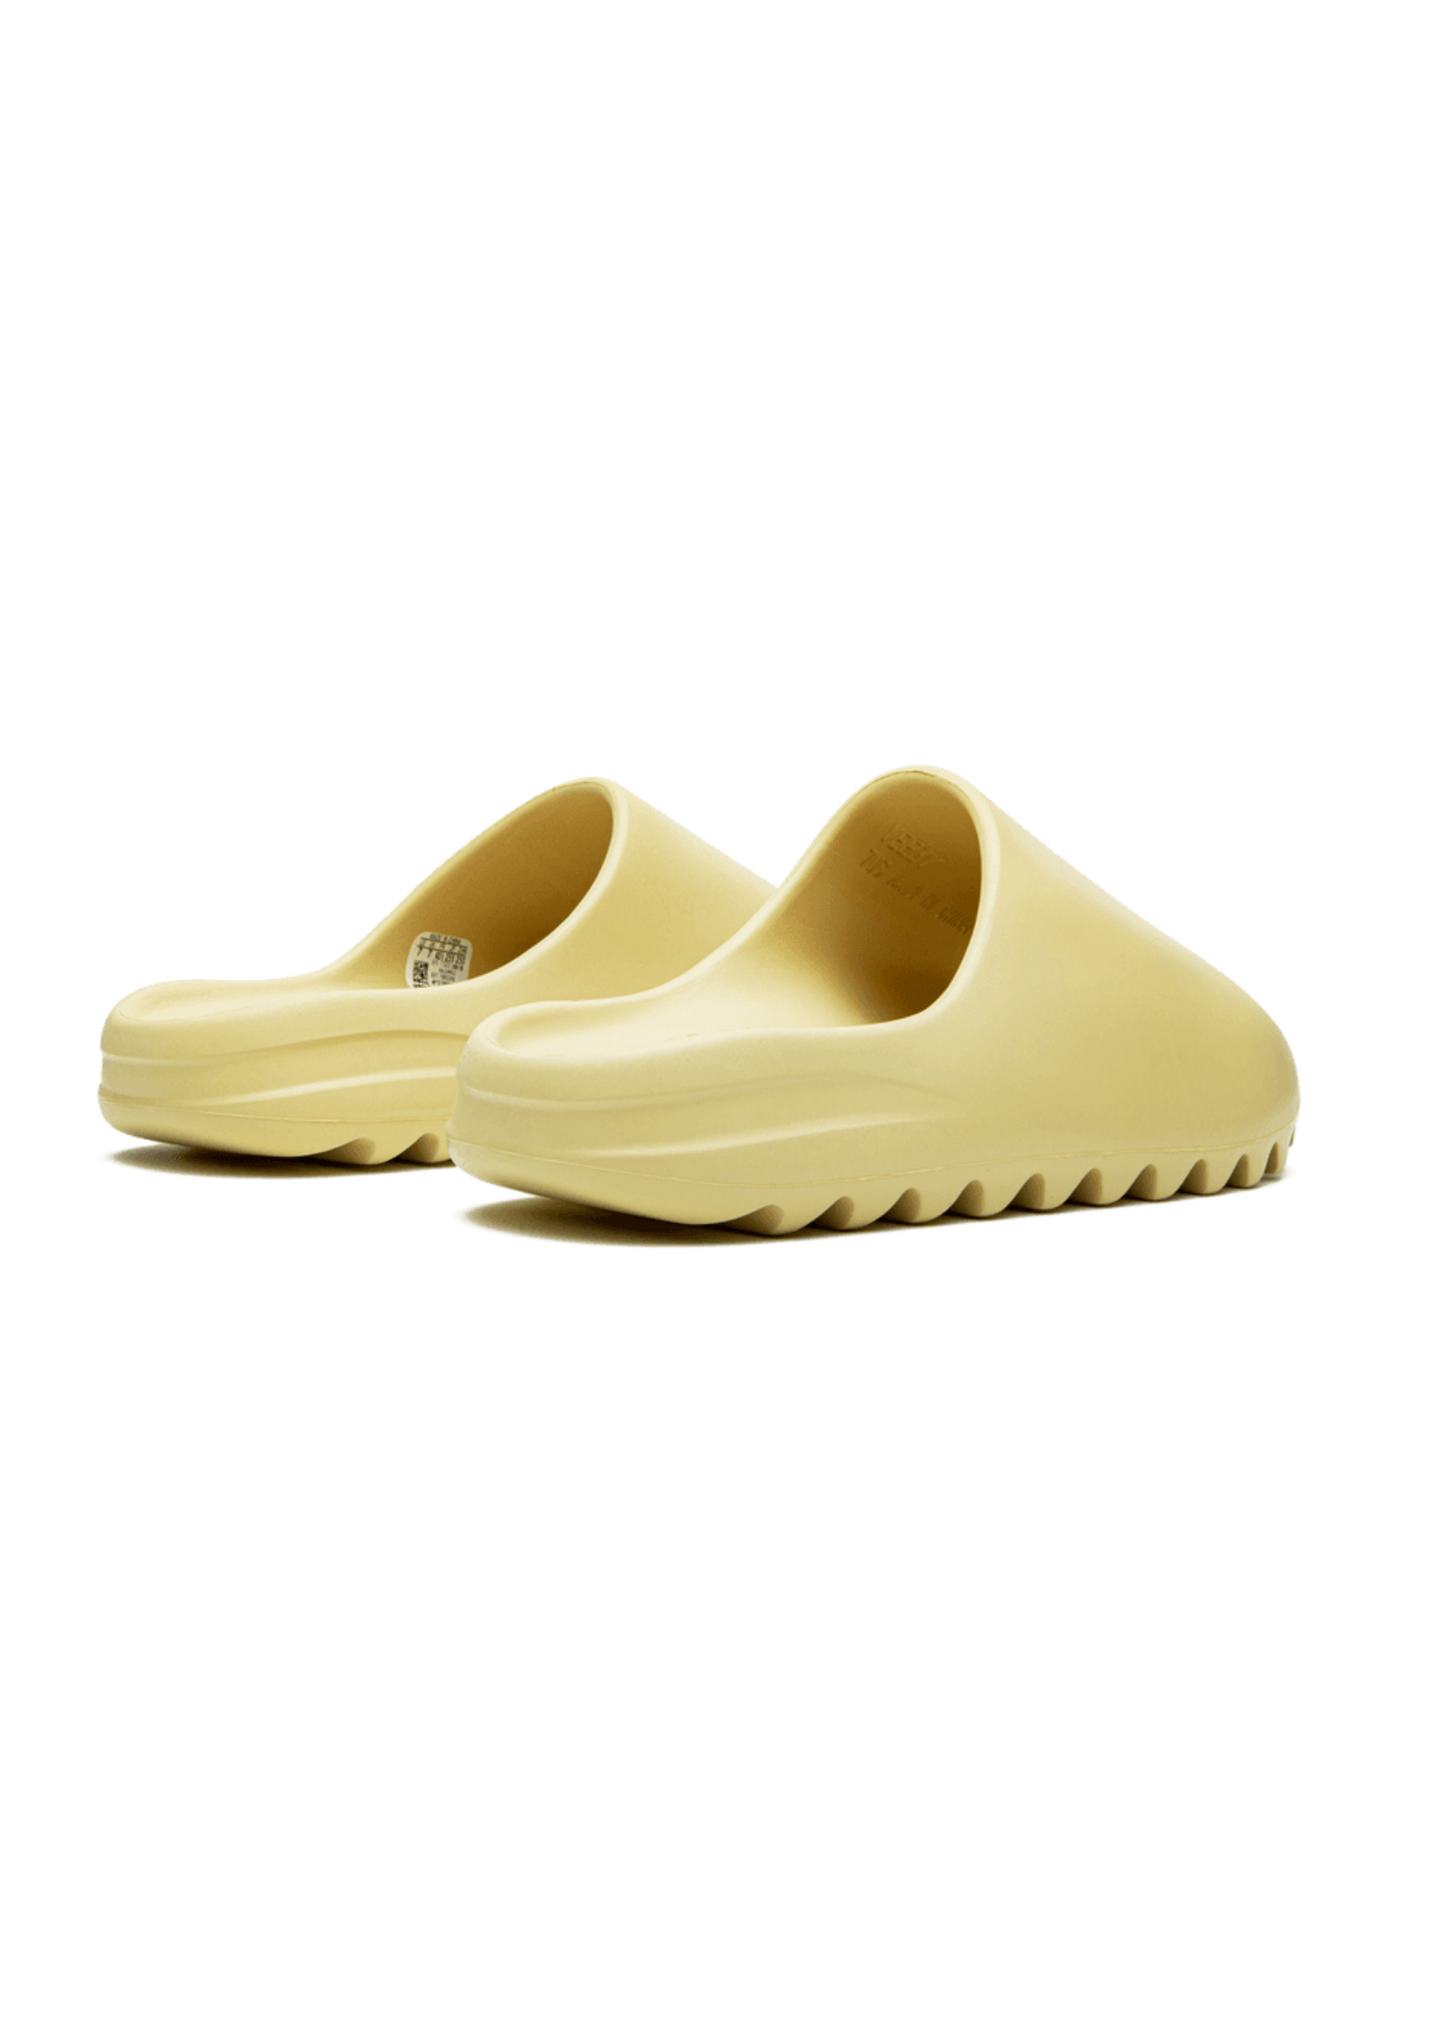 Adidas Yeezy Slides - DESERT SAND